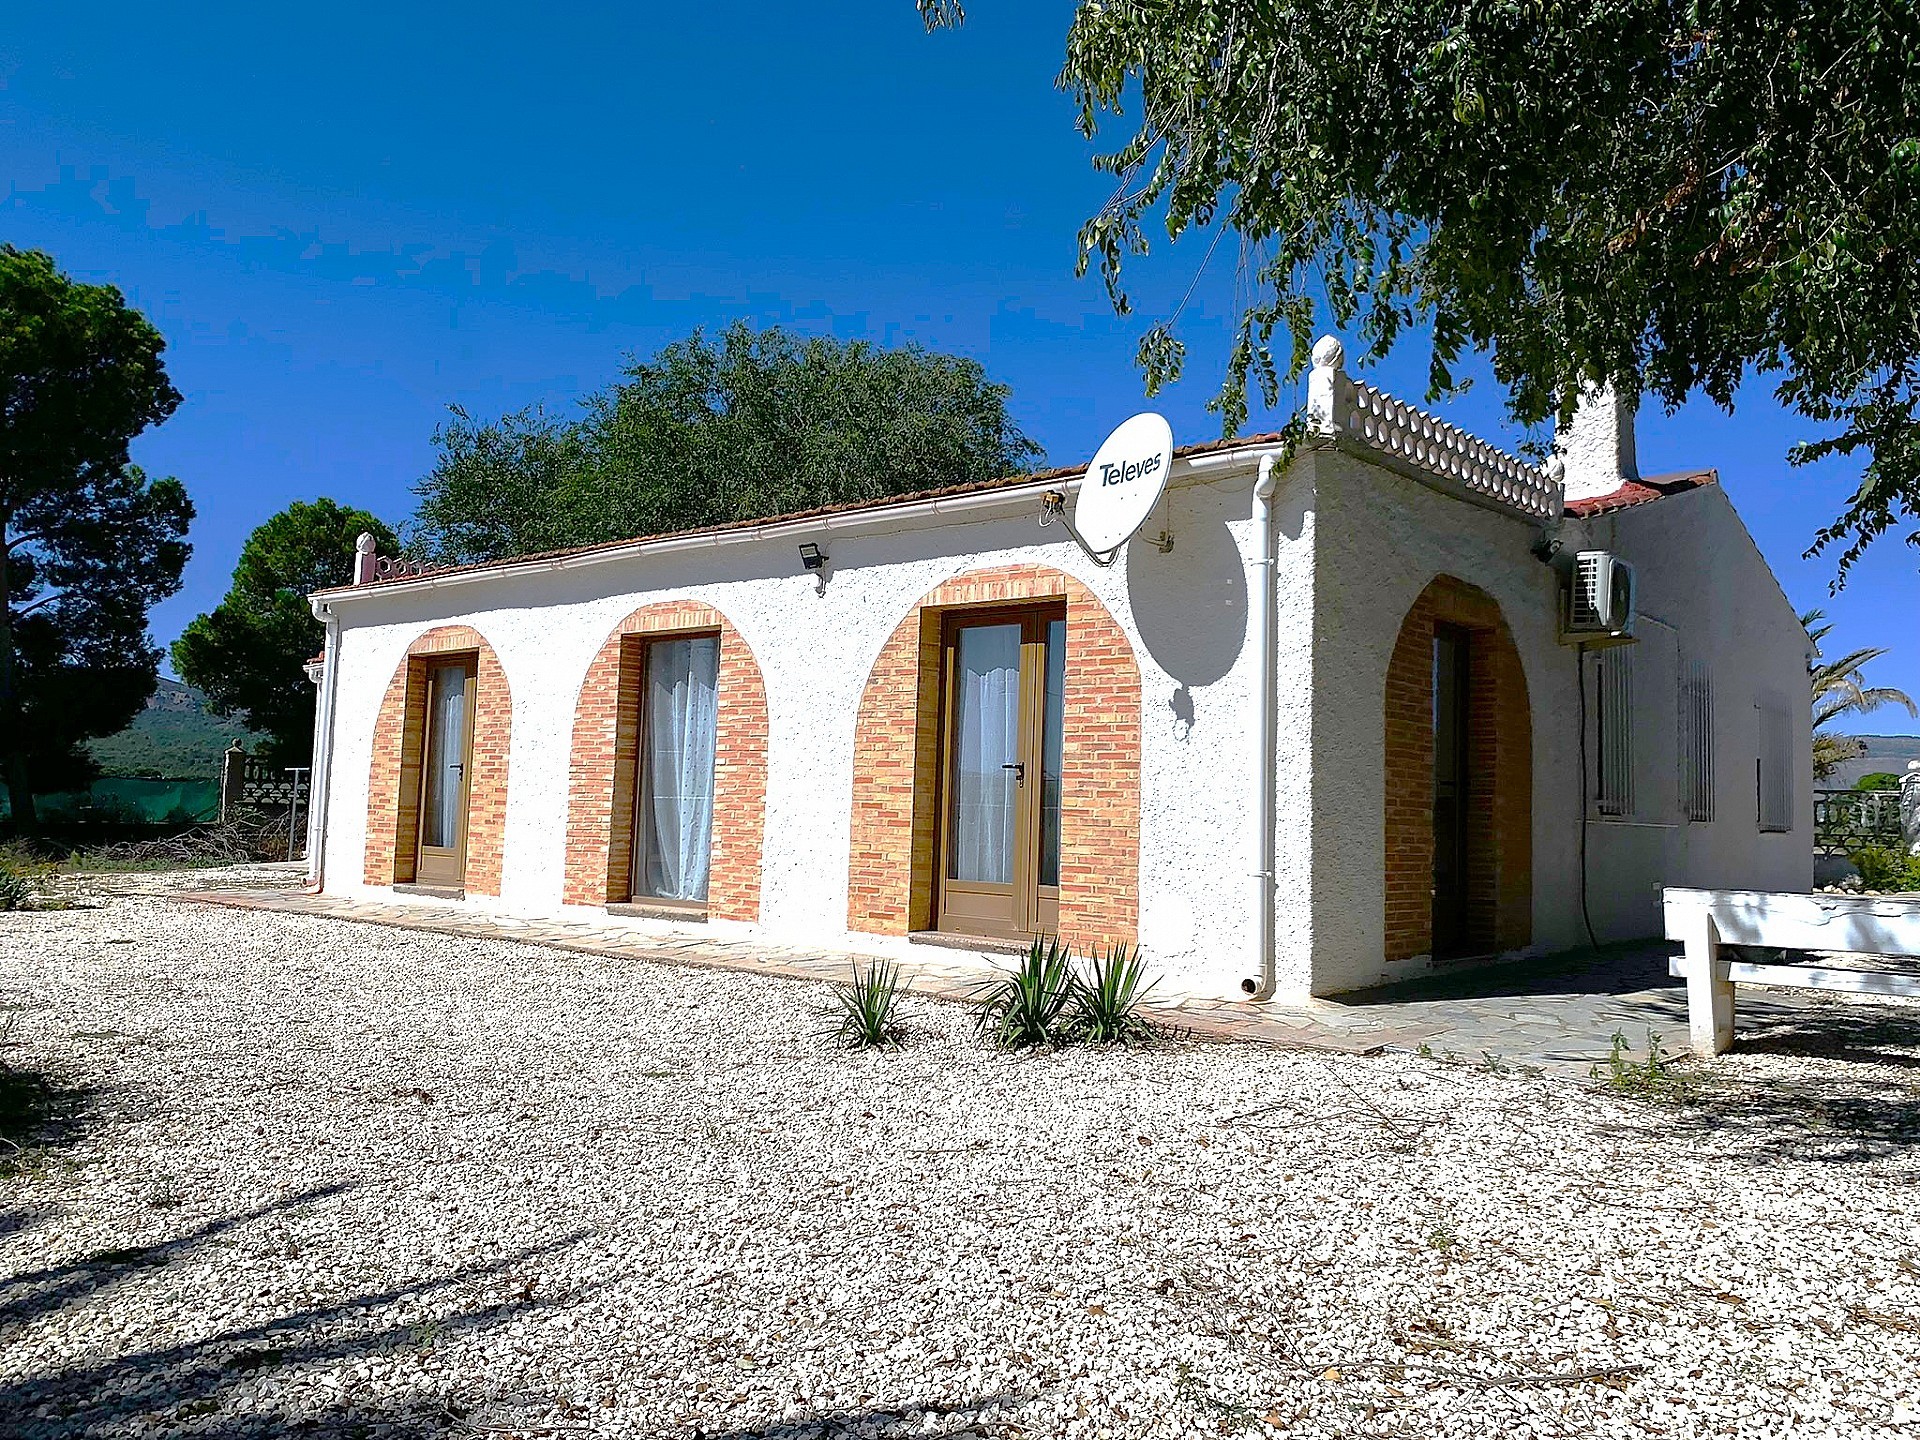 4 bedroom house / villa for sale in Caudete, Costa Blanca